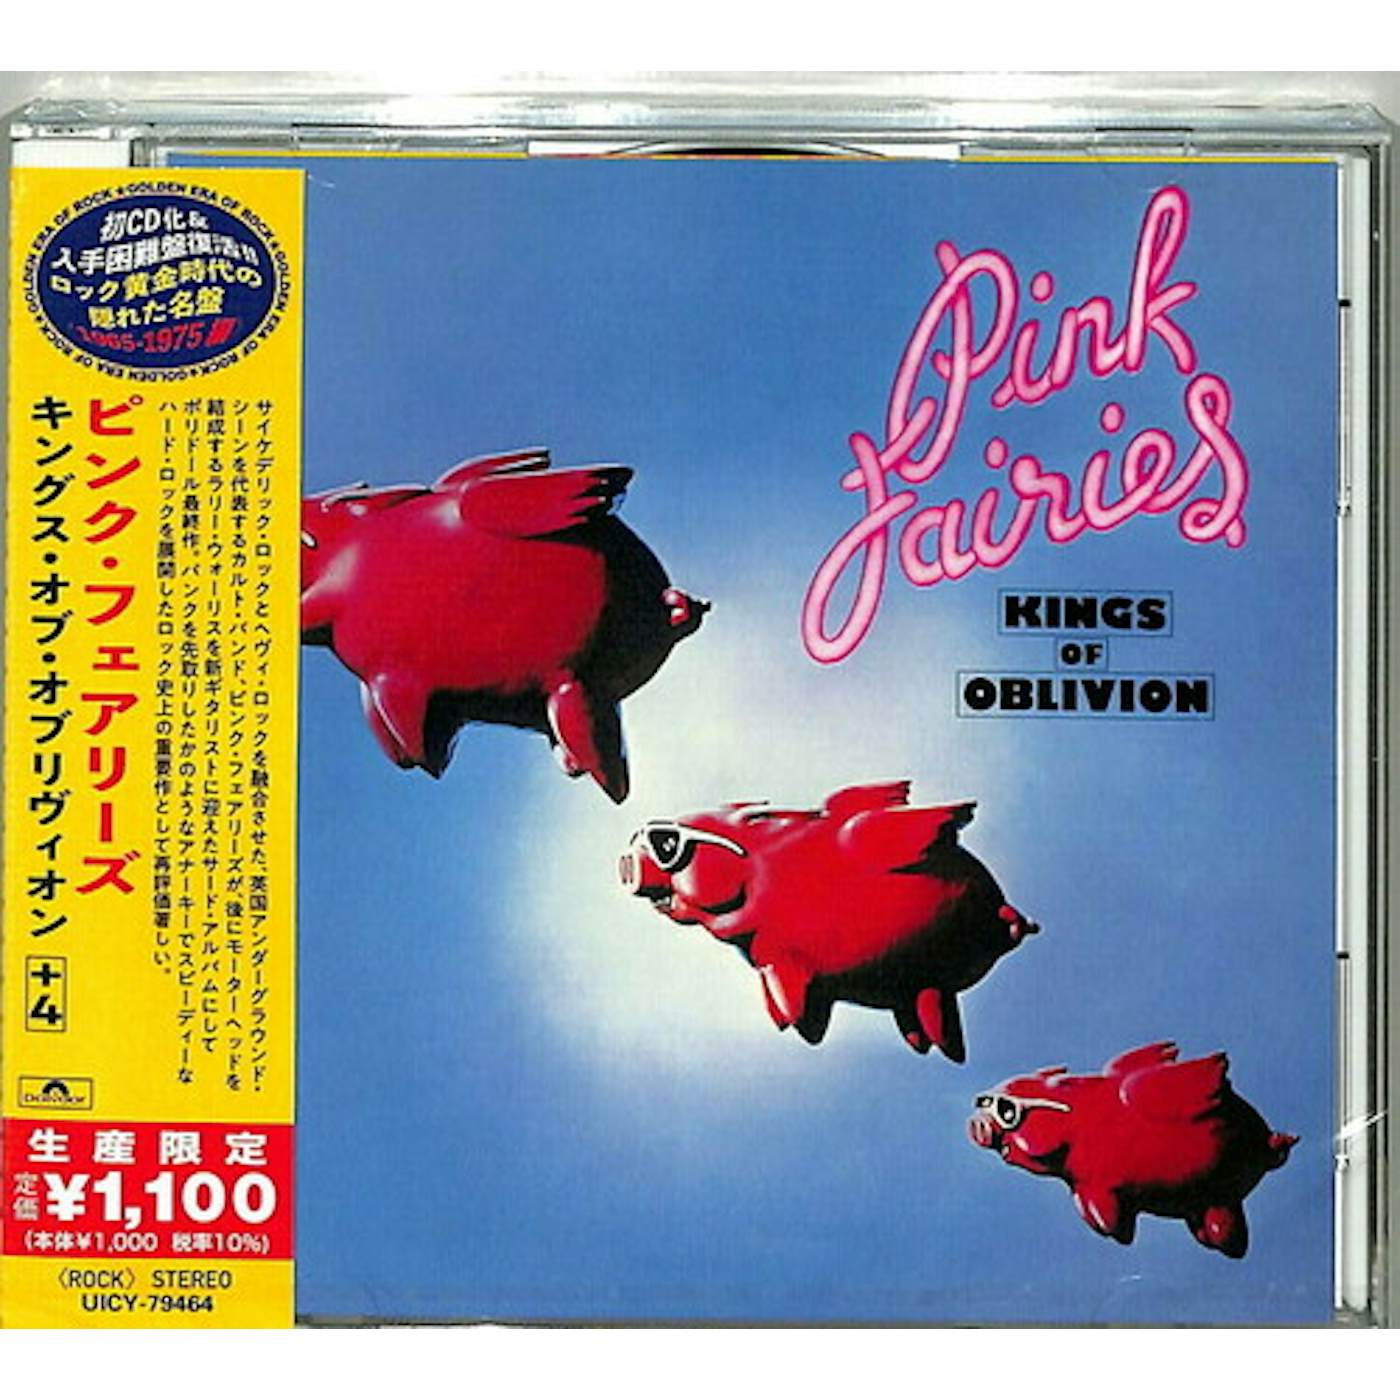 The Pink Fairies KINGS OF OBLIVION CD